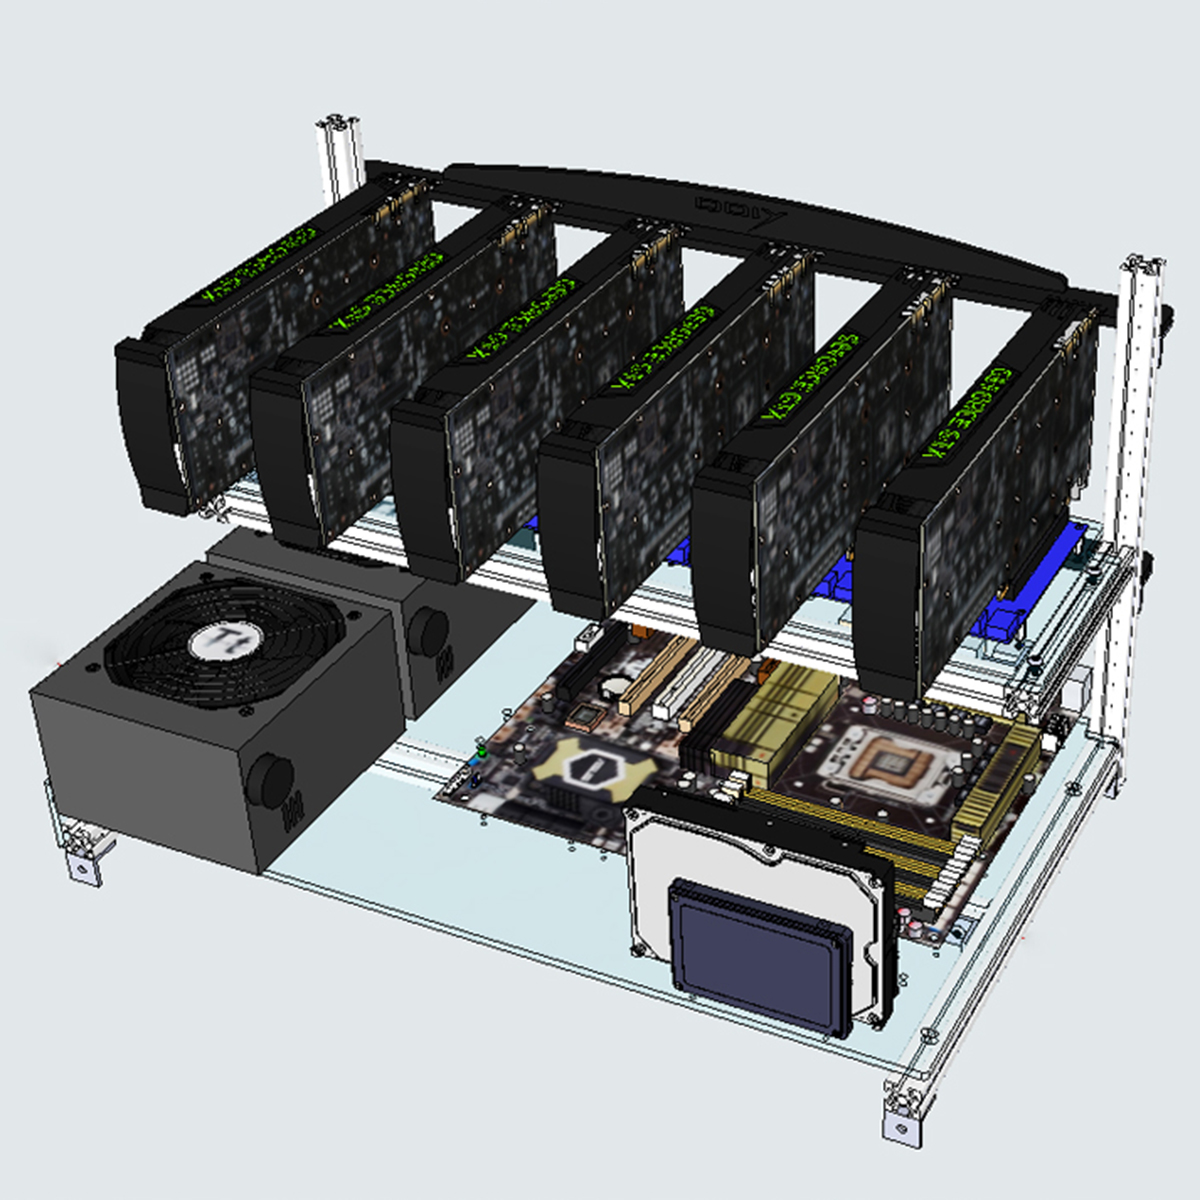 Excellwayreg-Aluminum-Open-Air-Mining-Rig-Frame-Case-Holder-For-6-GPU-ETH-Ethereum-1207169